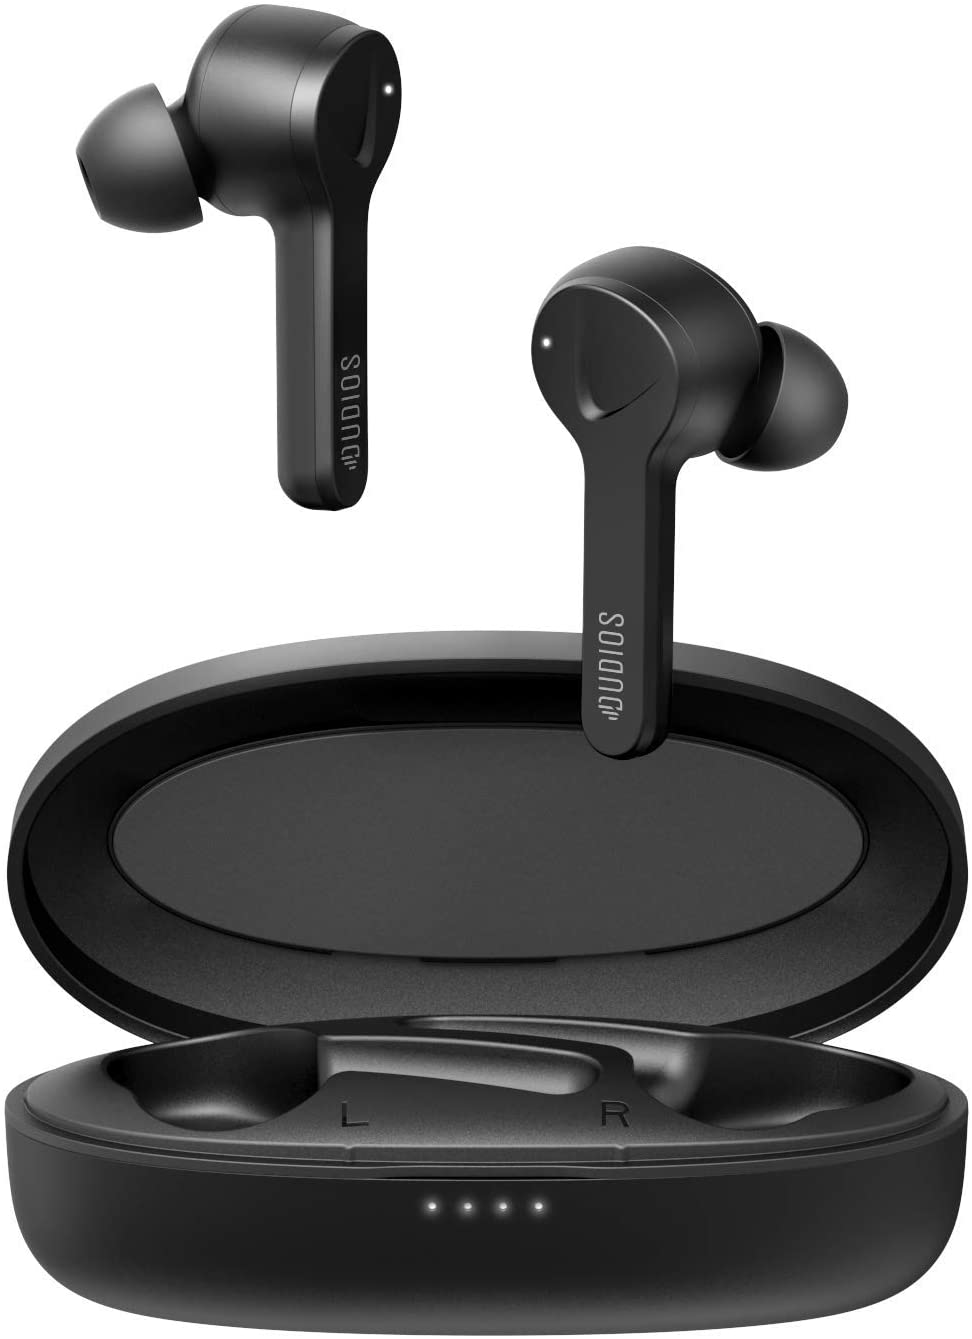 Dudios True Wireless Earbuds Bluetooth 5.0 Headphones